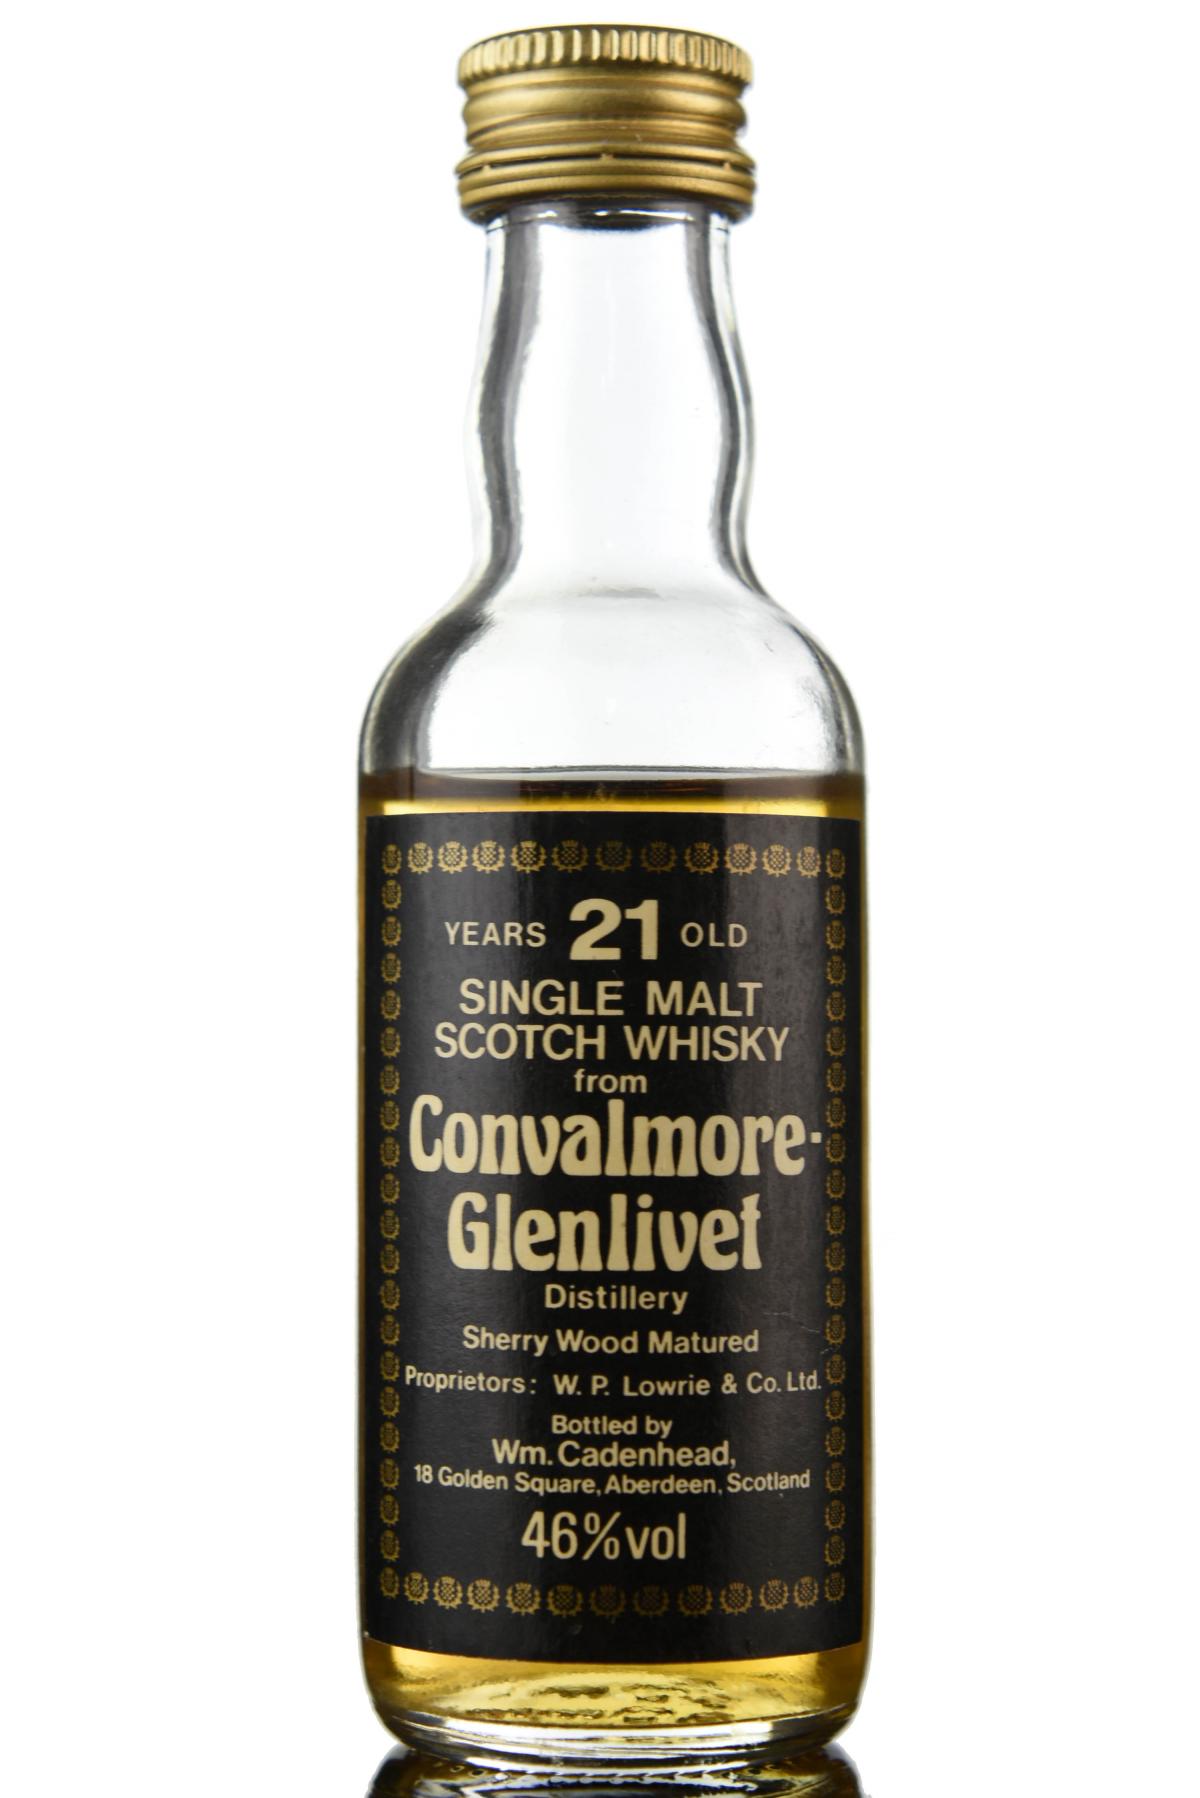 Convalmore-Glenlivet 21 Year Old - Cadenhead Miniature